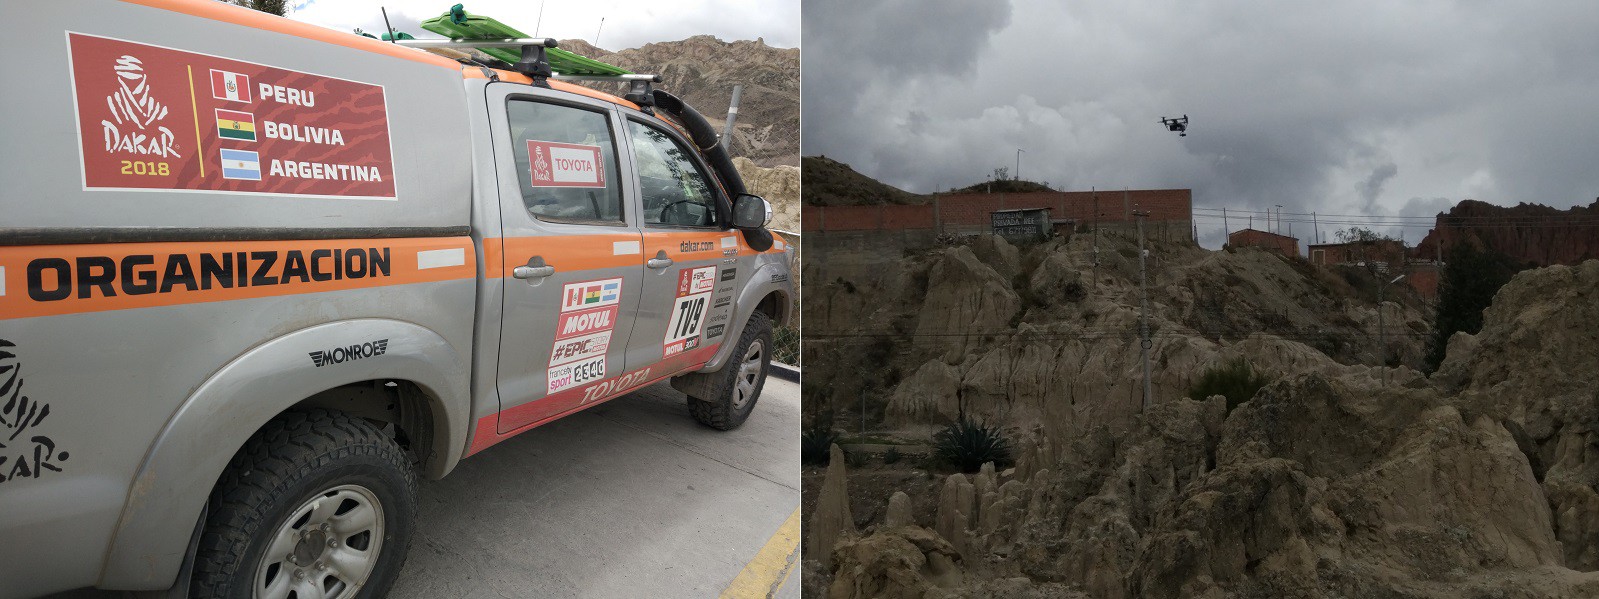 Панамерикана 2018: Перу и Боливия